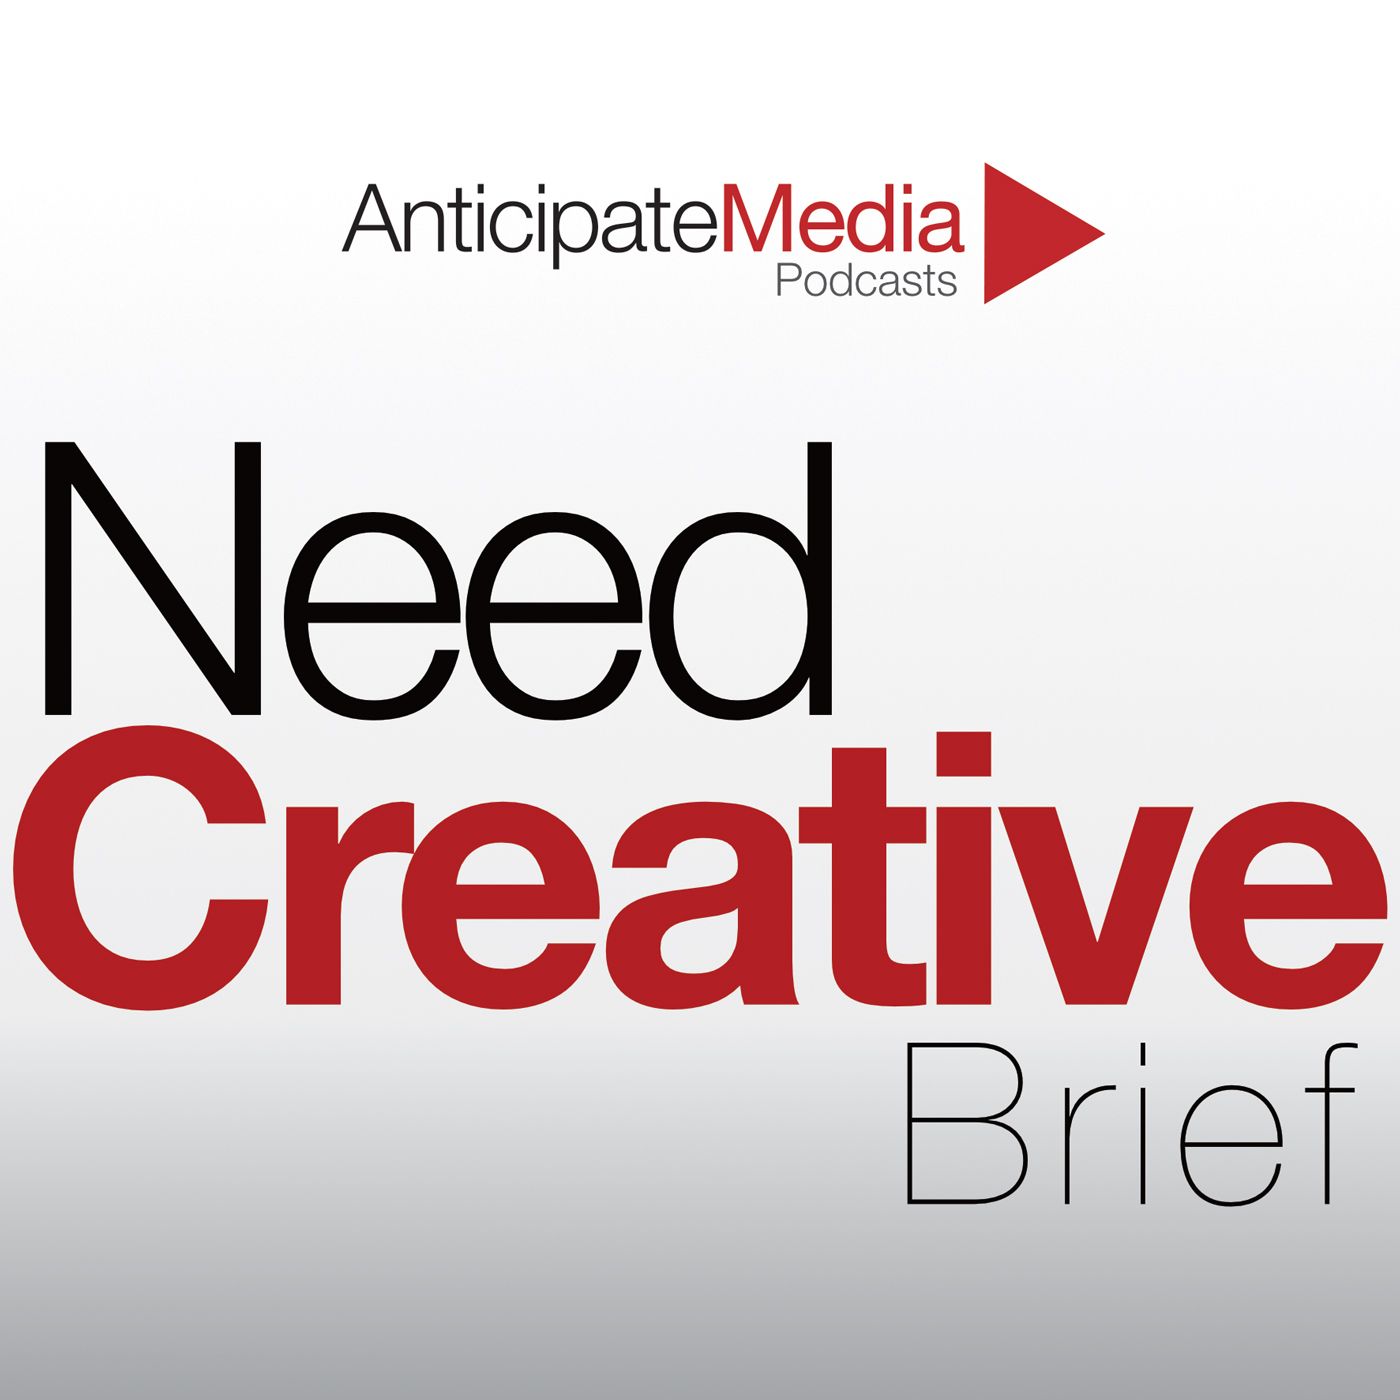 NeedCreative Brief Podcast - Anticipate Media